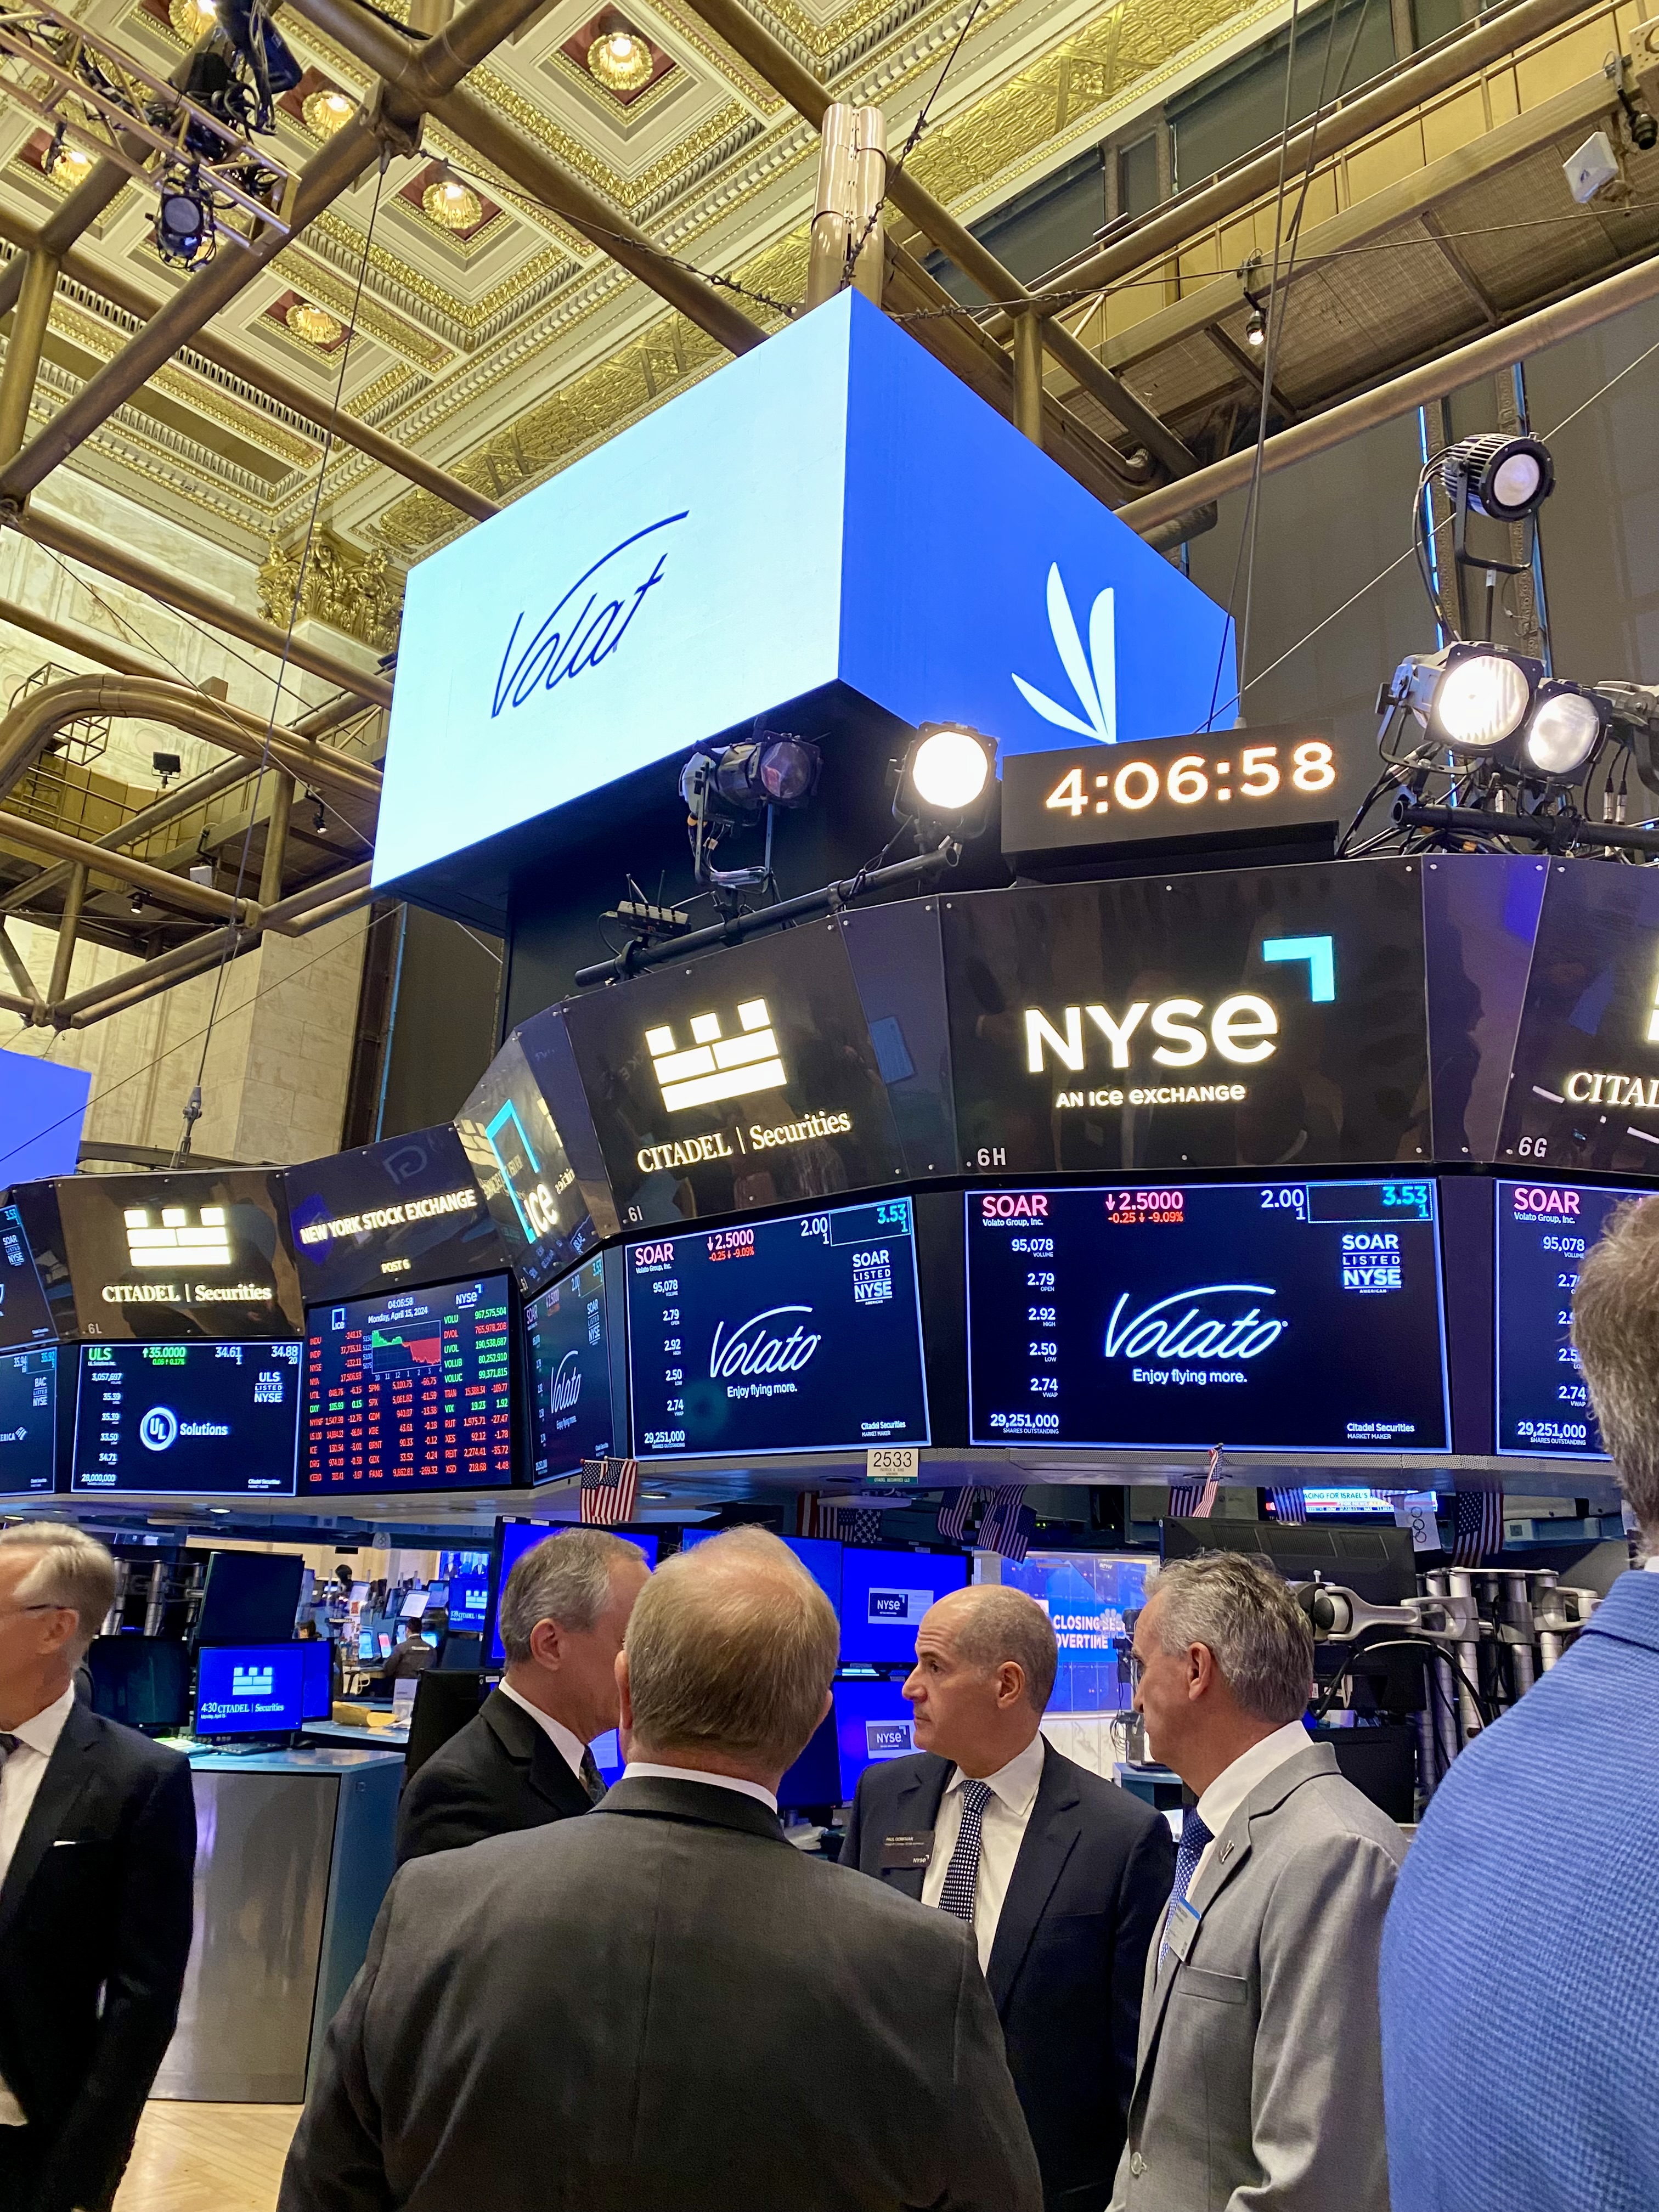 Volato sign at the New York Stock Exchange